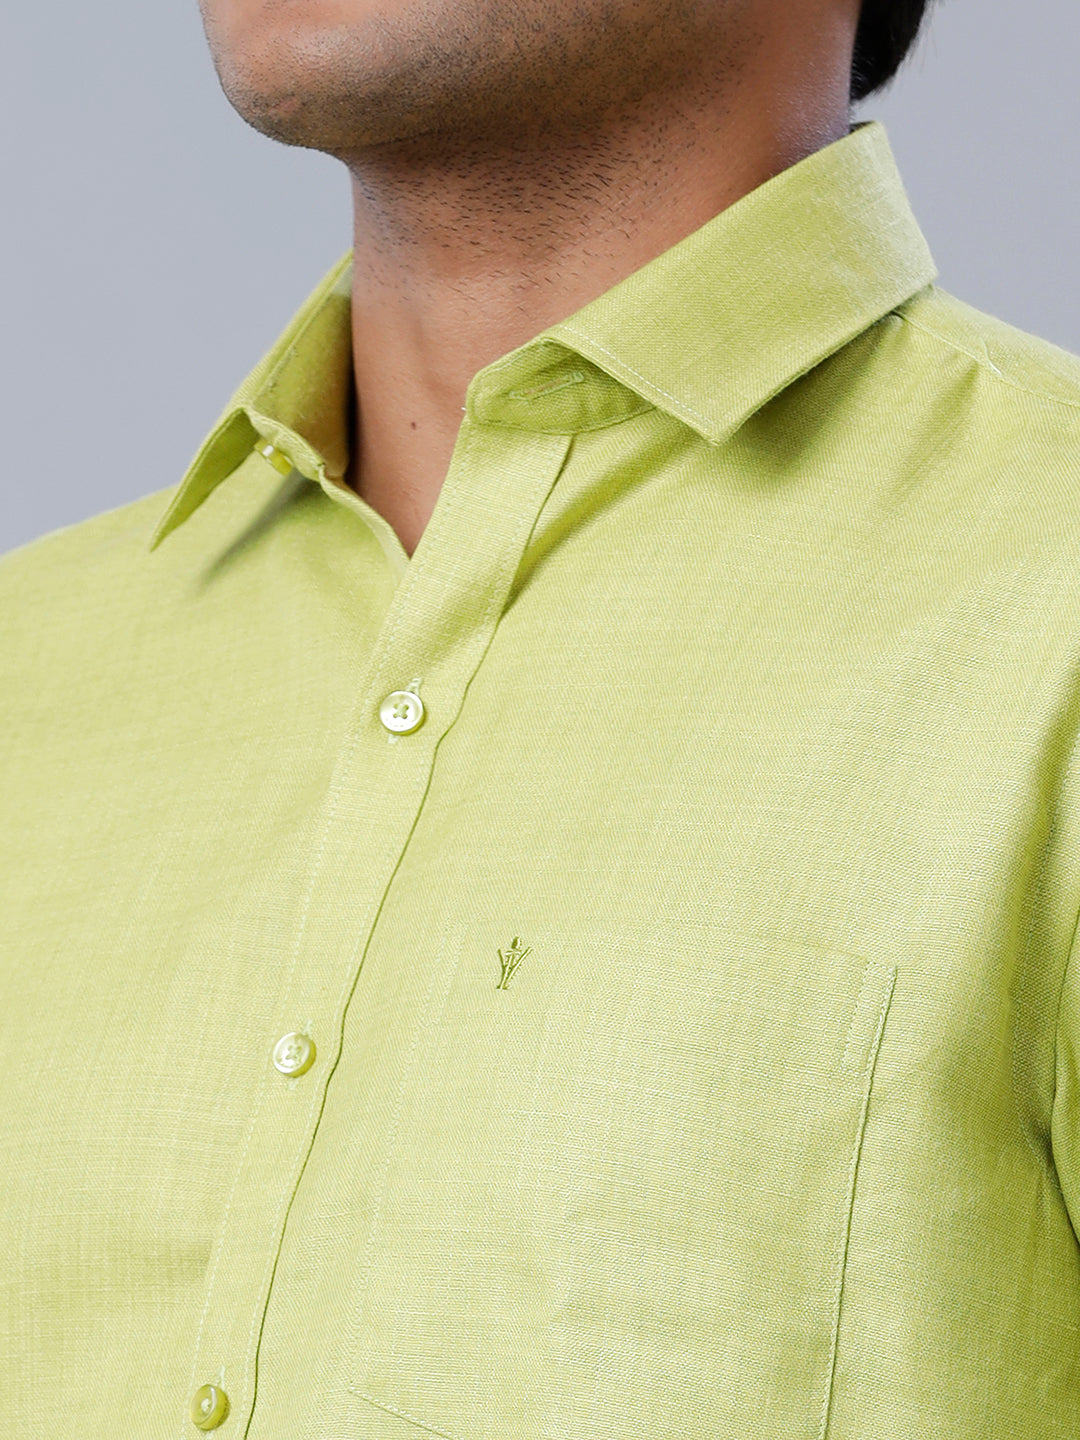 Mens Formal Shirt Full Sleeves Green T41 TQ2-Zoom view